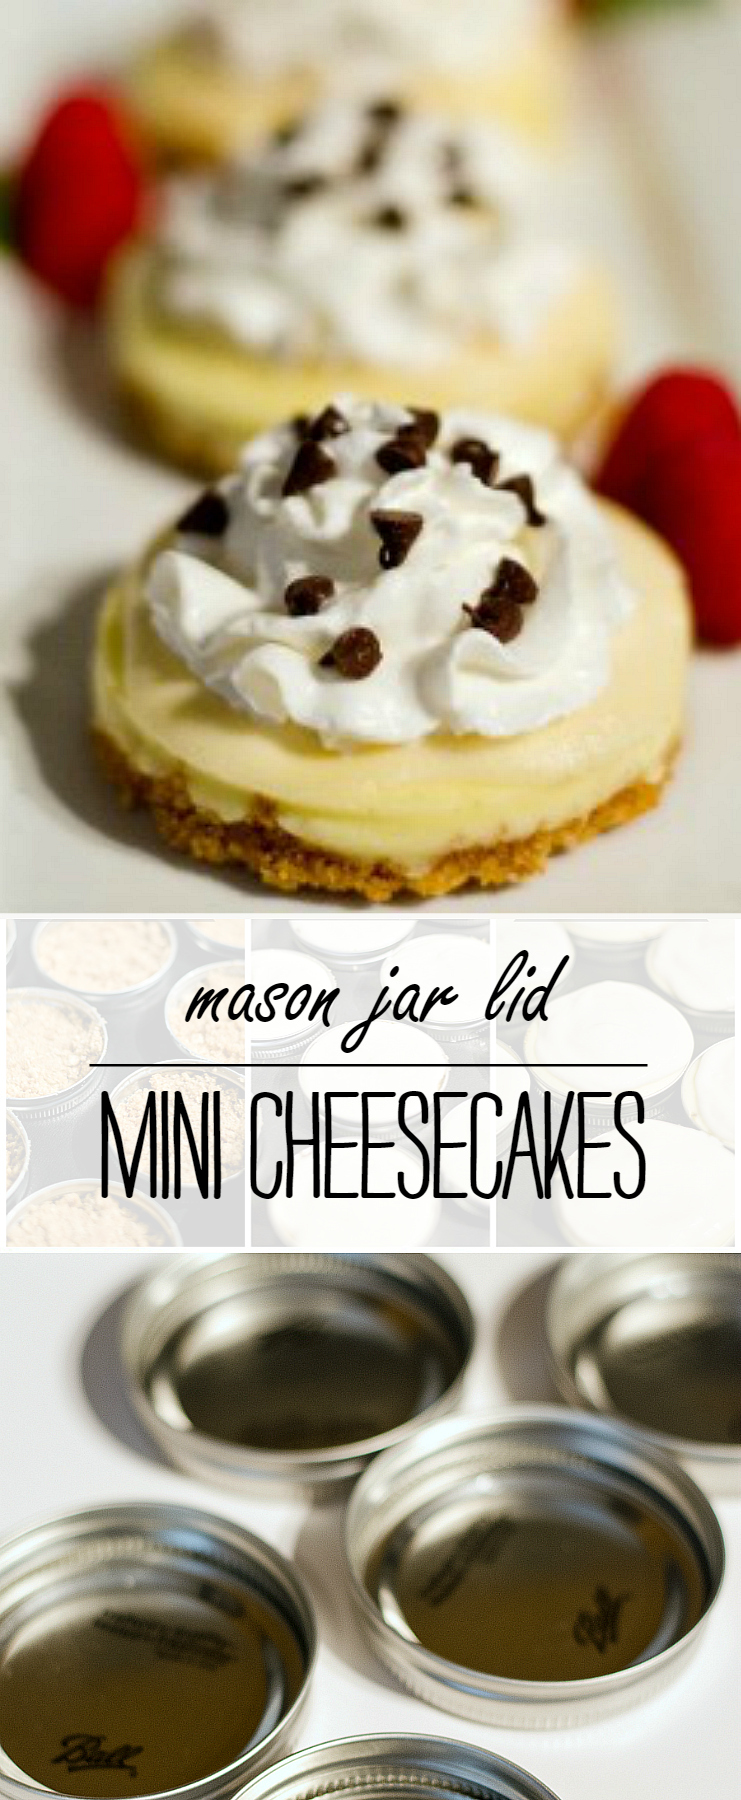 Mini Cheesecakes: Mason Jar Lid Cheesecakes